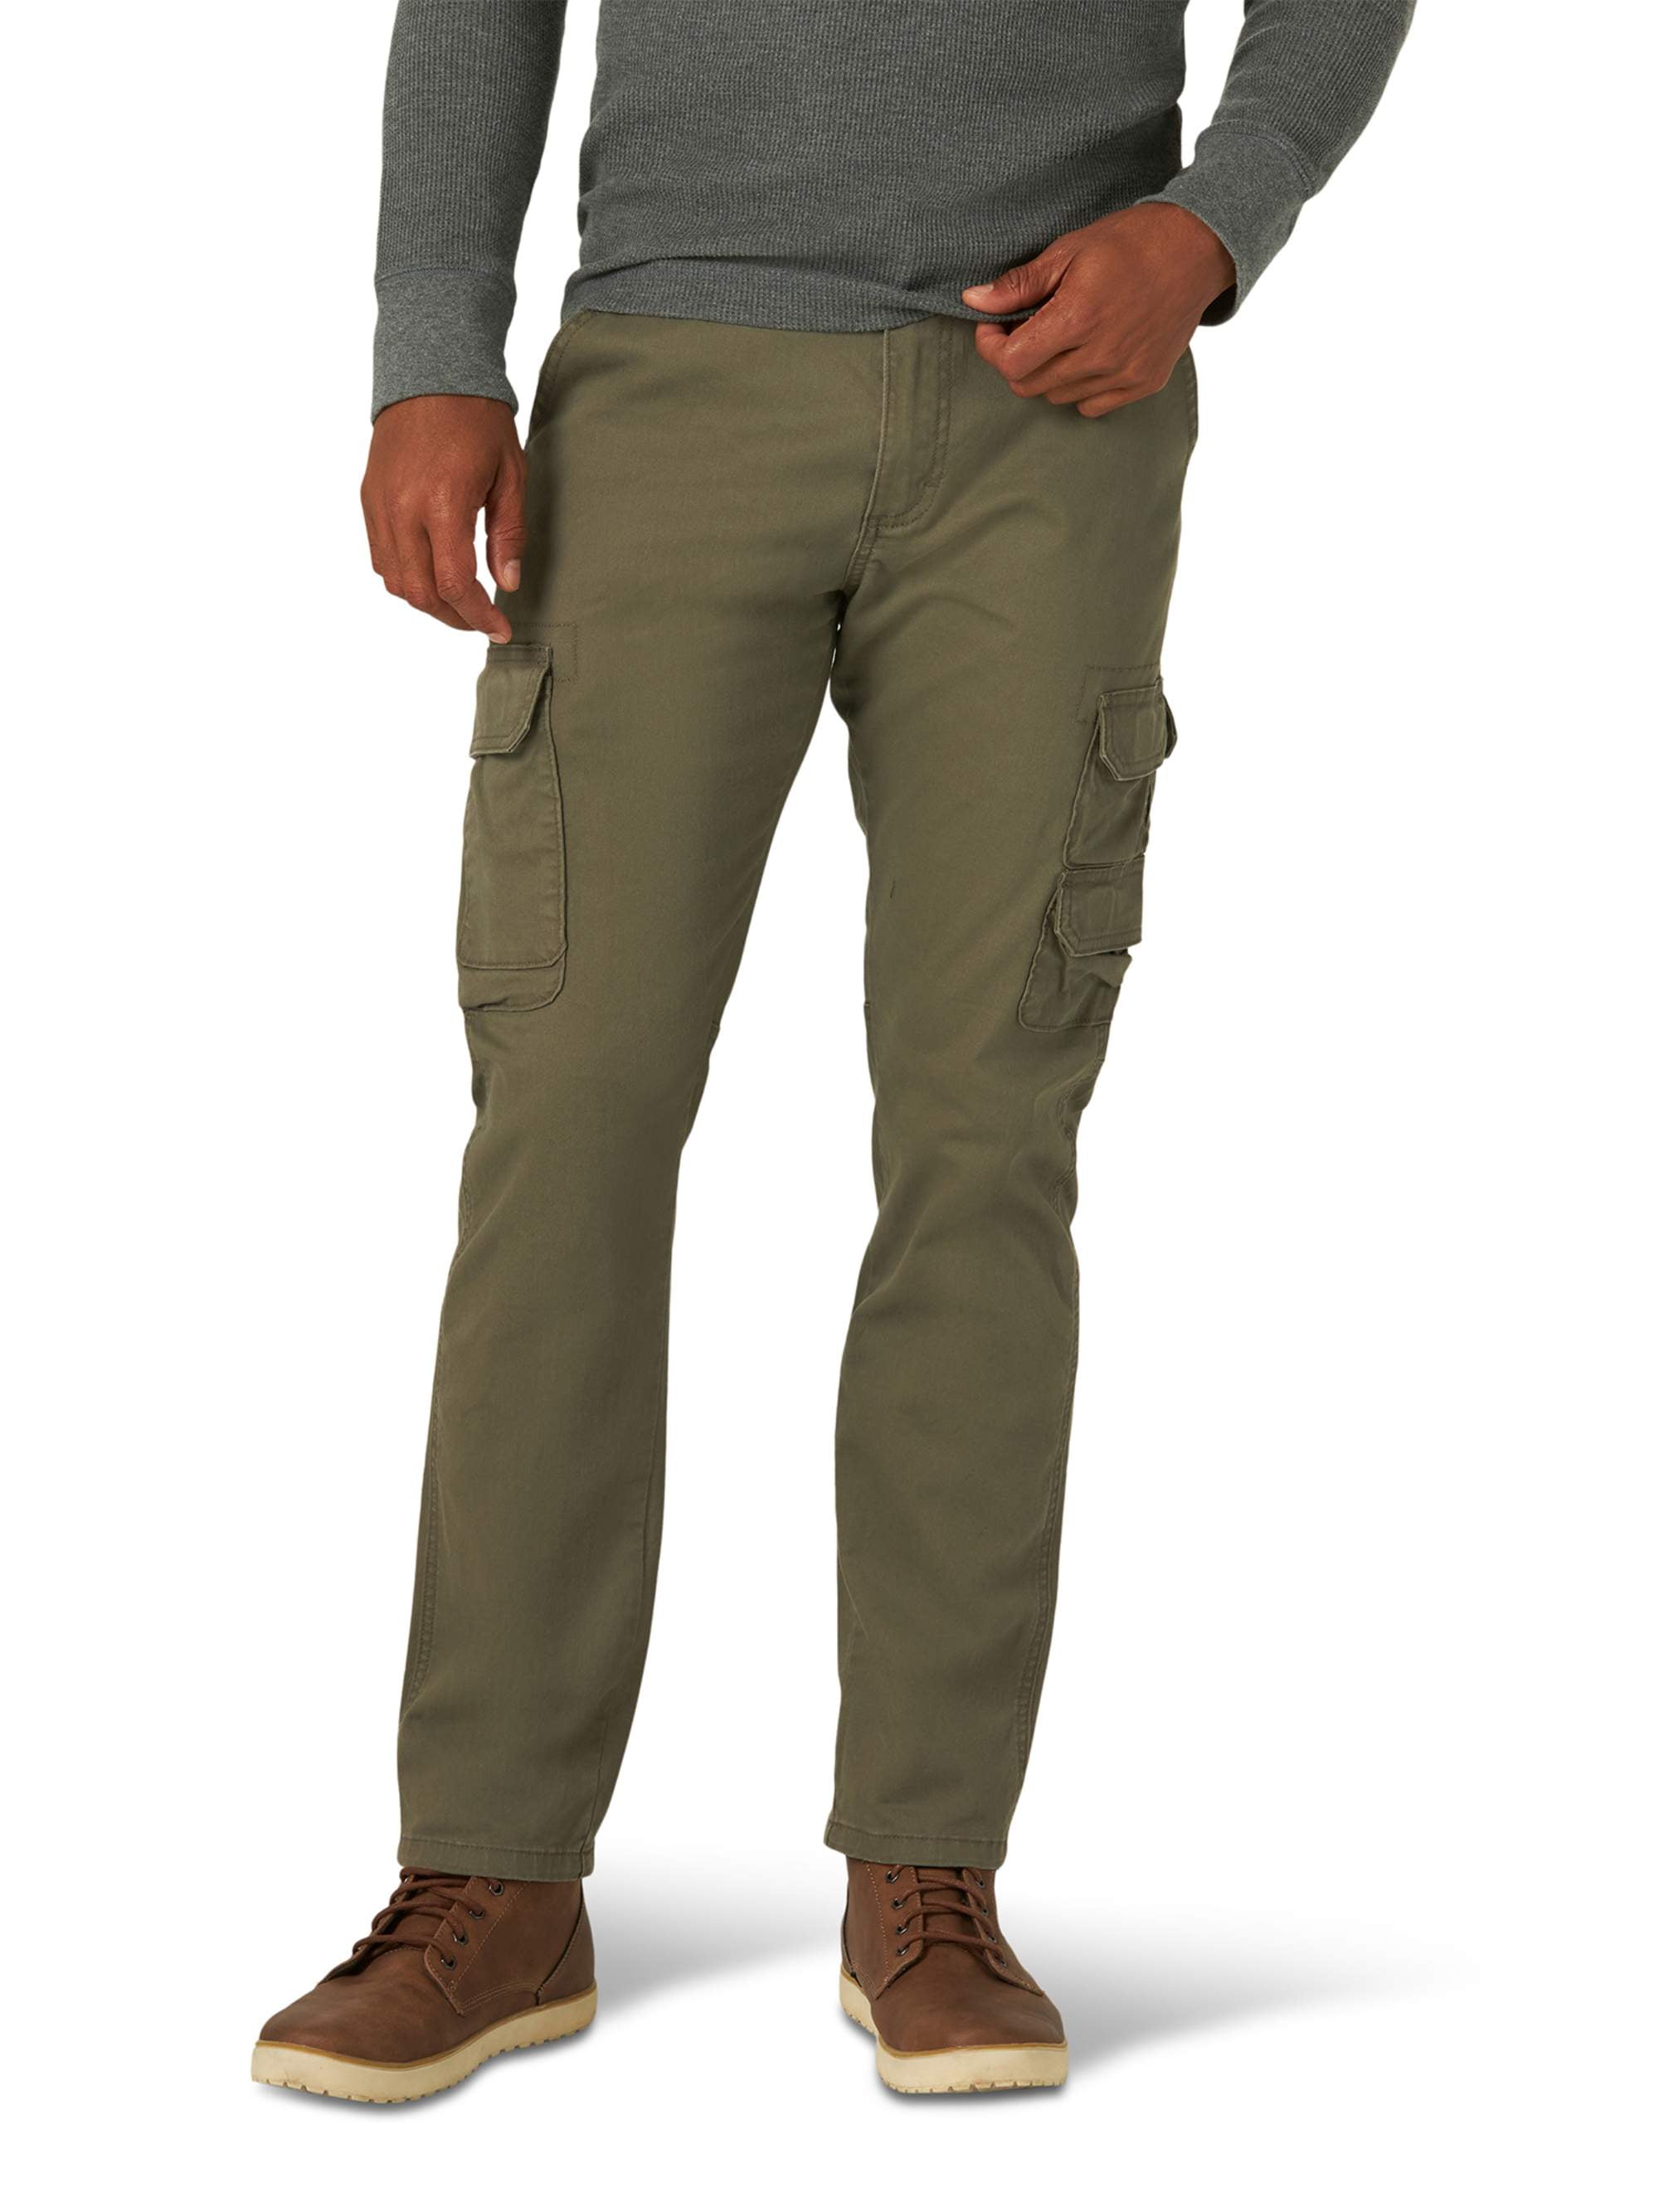 Wrangler Men's Size 36x29 Pants Comfort Solution Series Regular Fit  Khakis | eBay